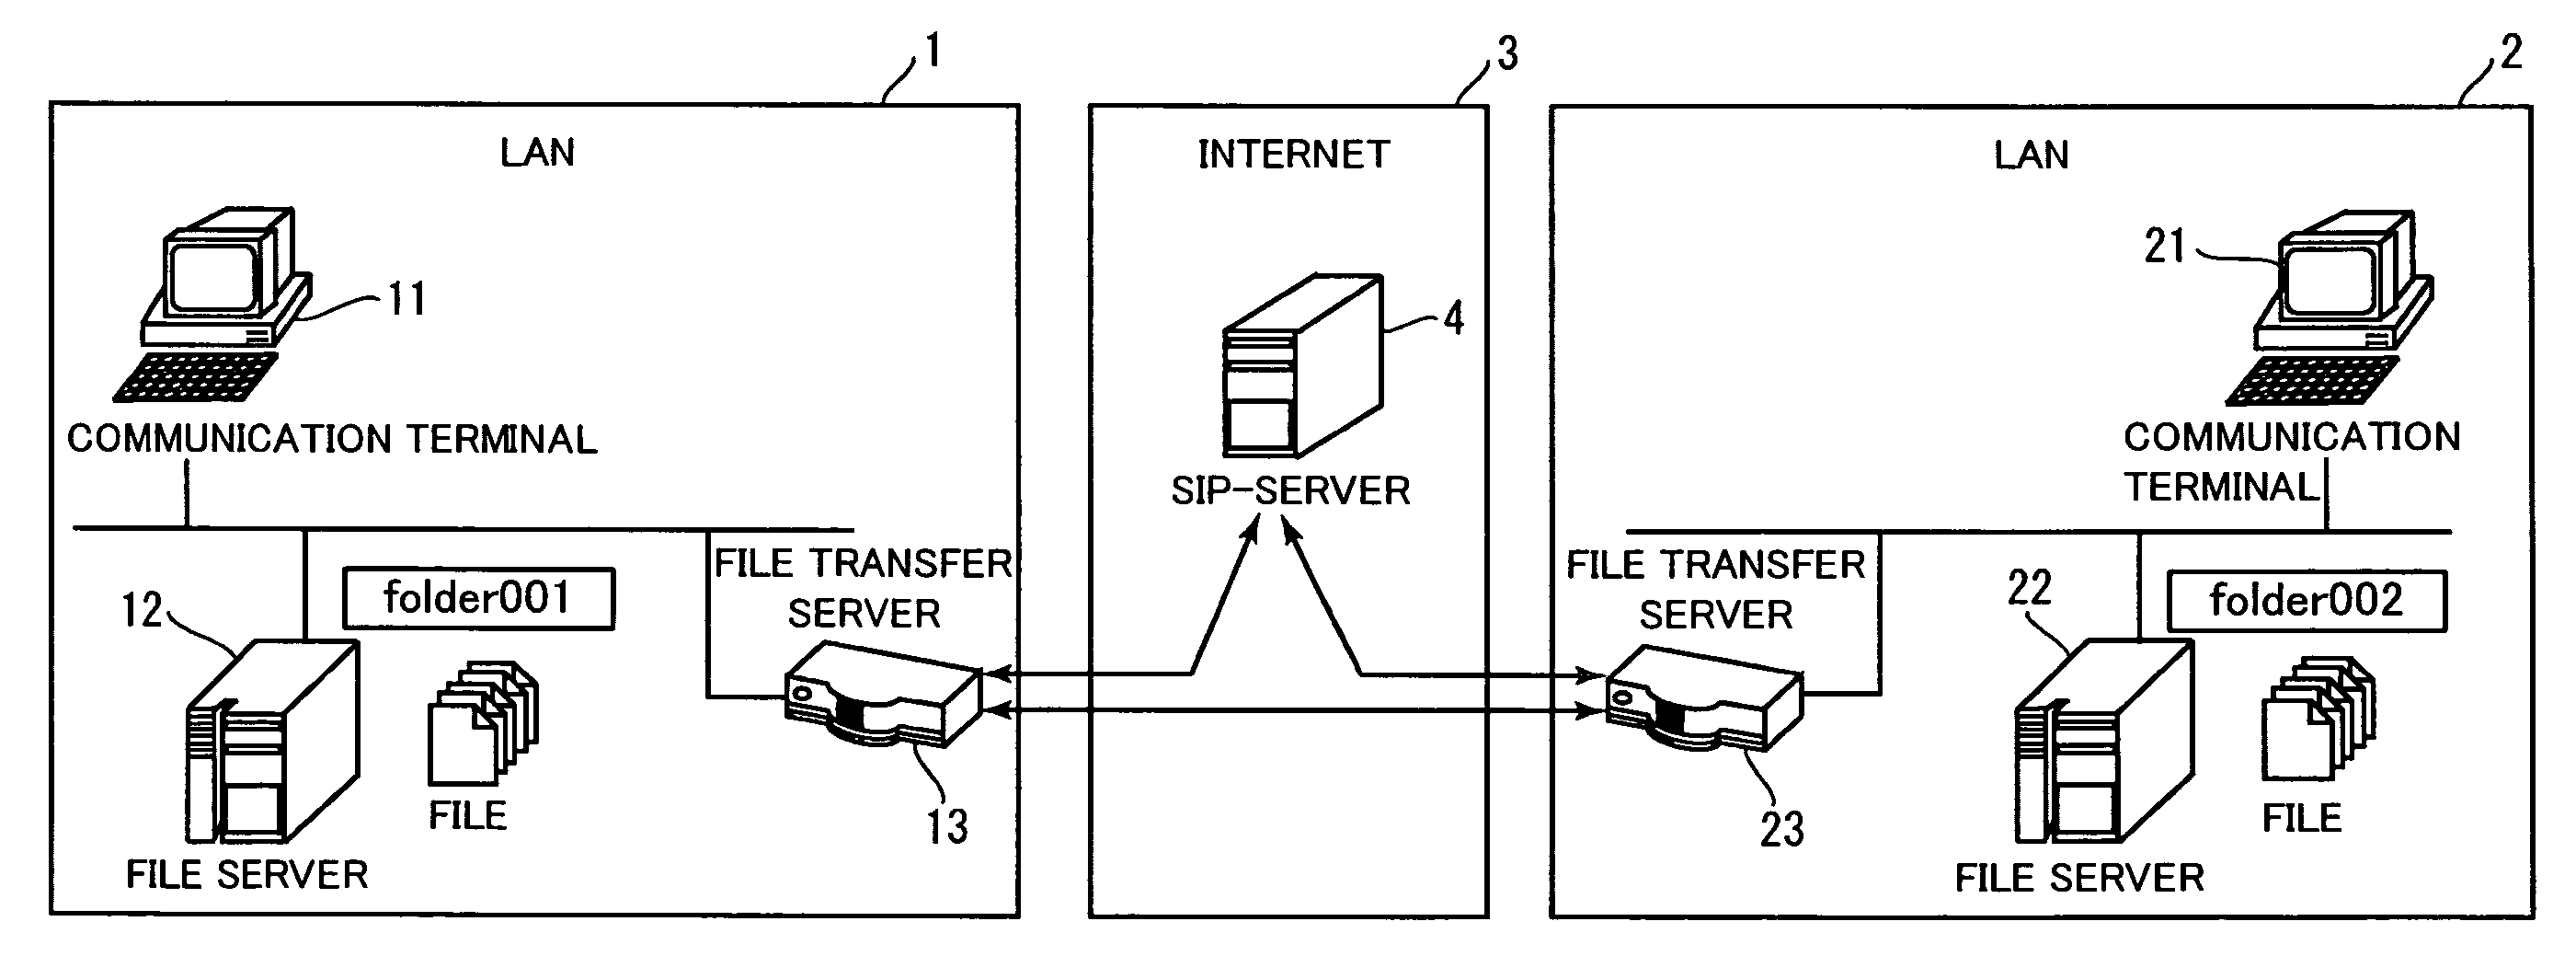 File transfer server